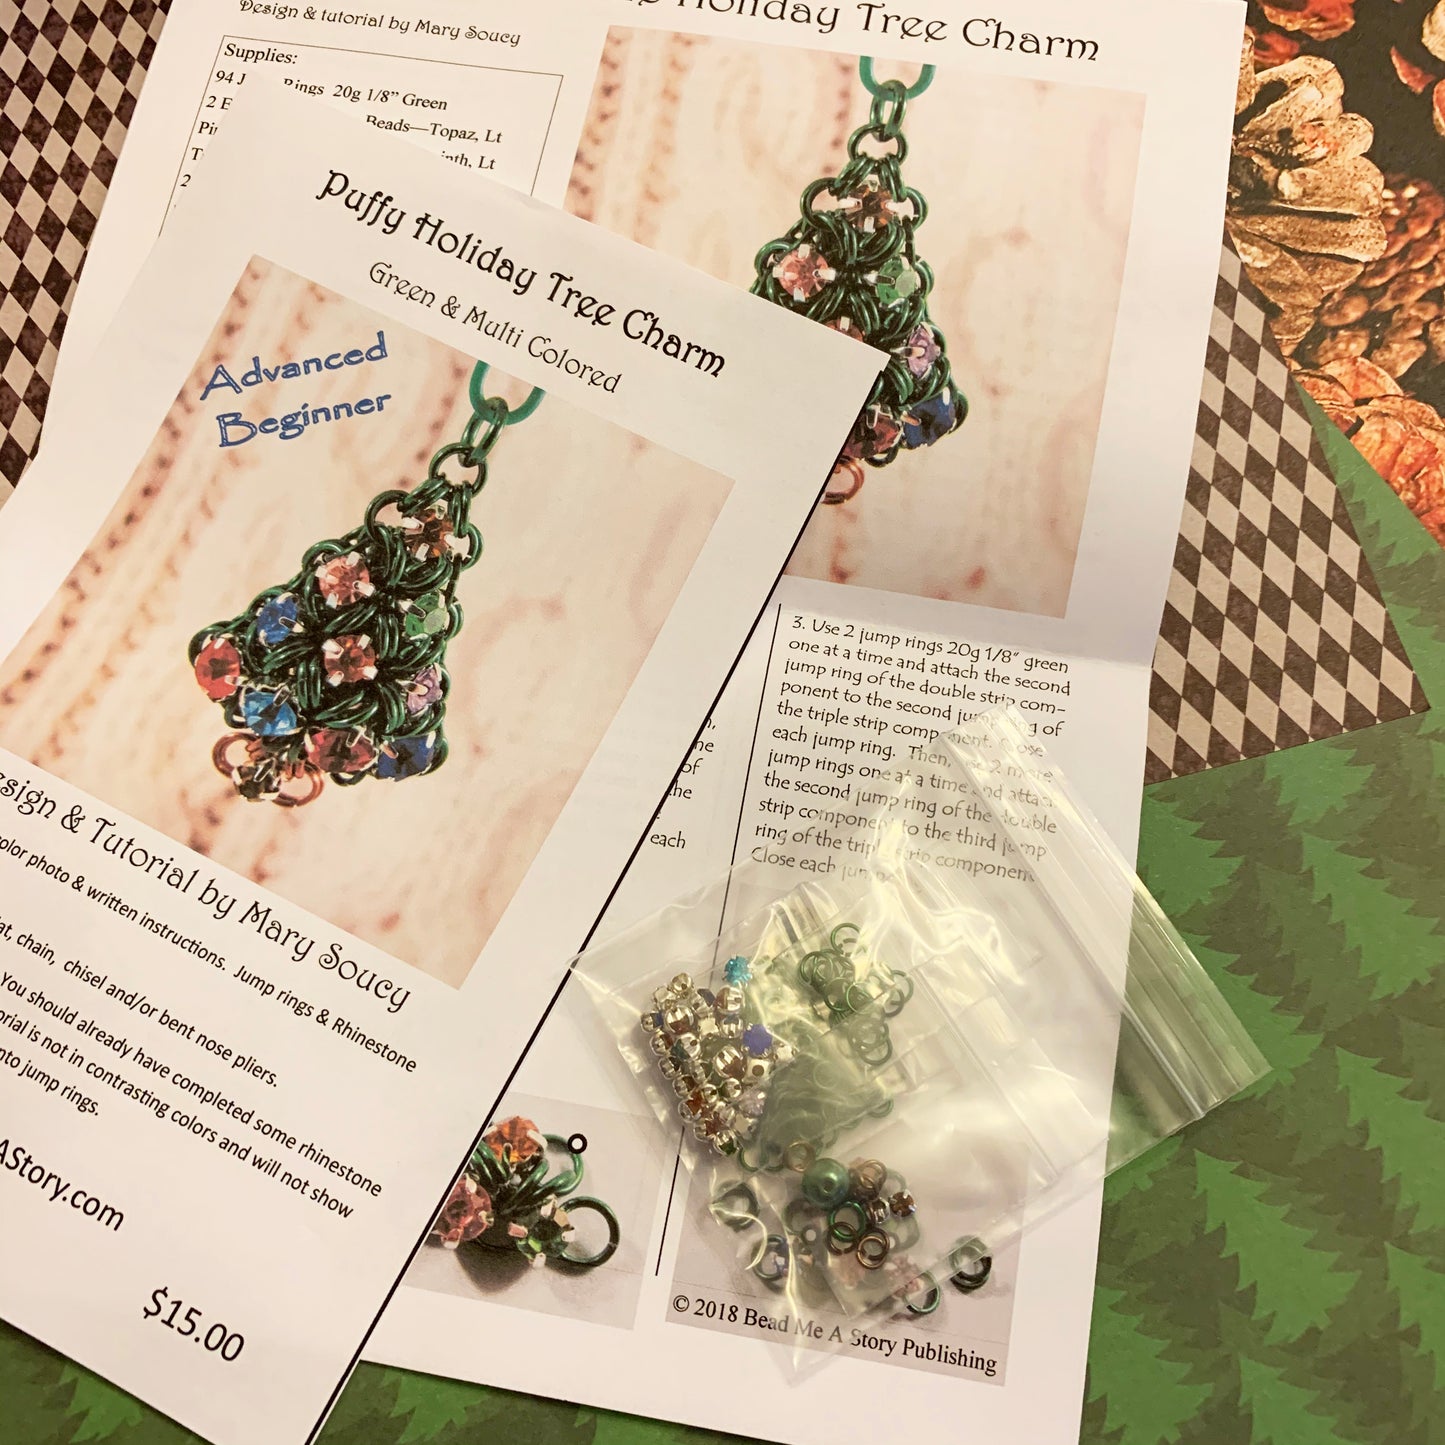 Rhinestone Christmas Tree Pendant Kit with Video Class - Green & Multicolor